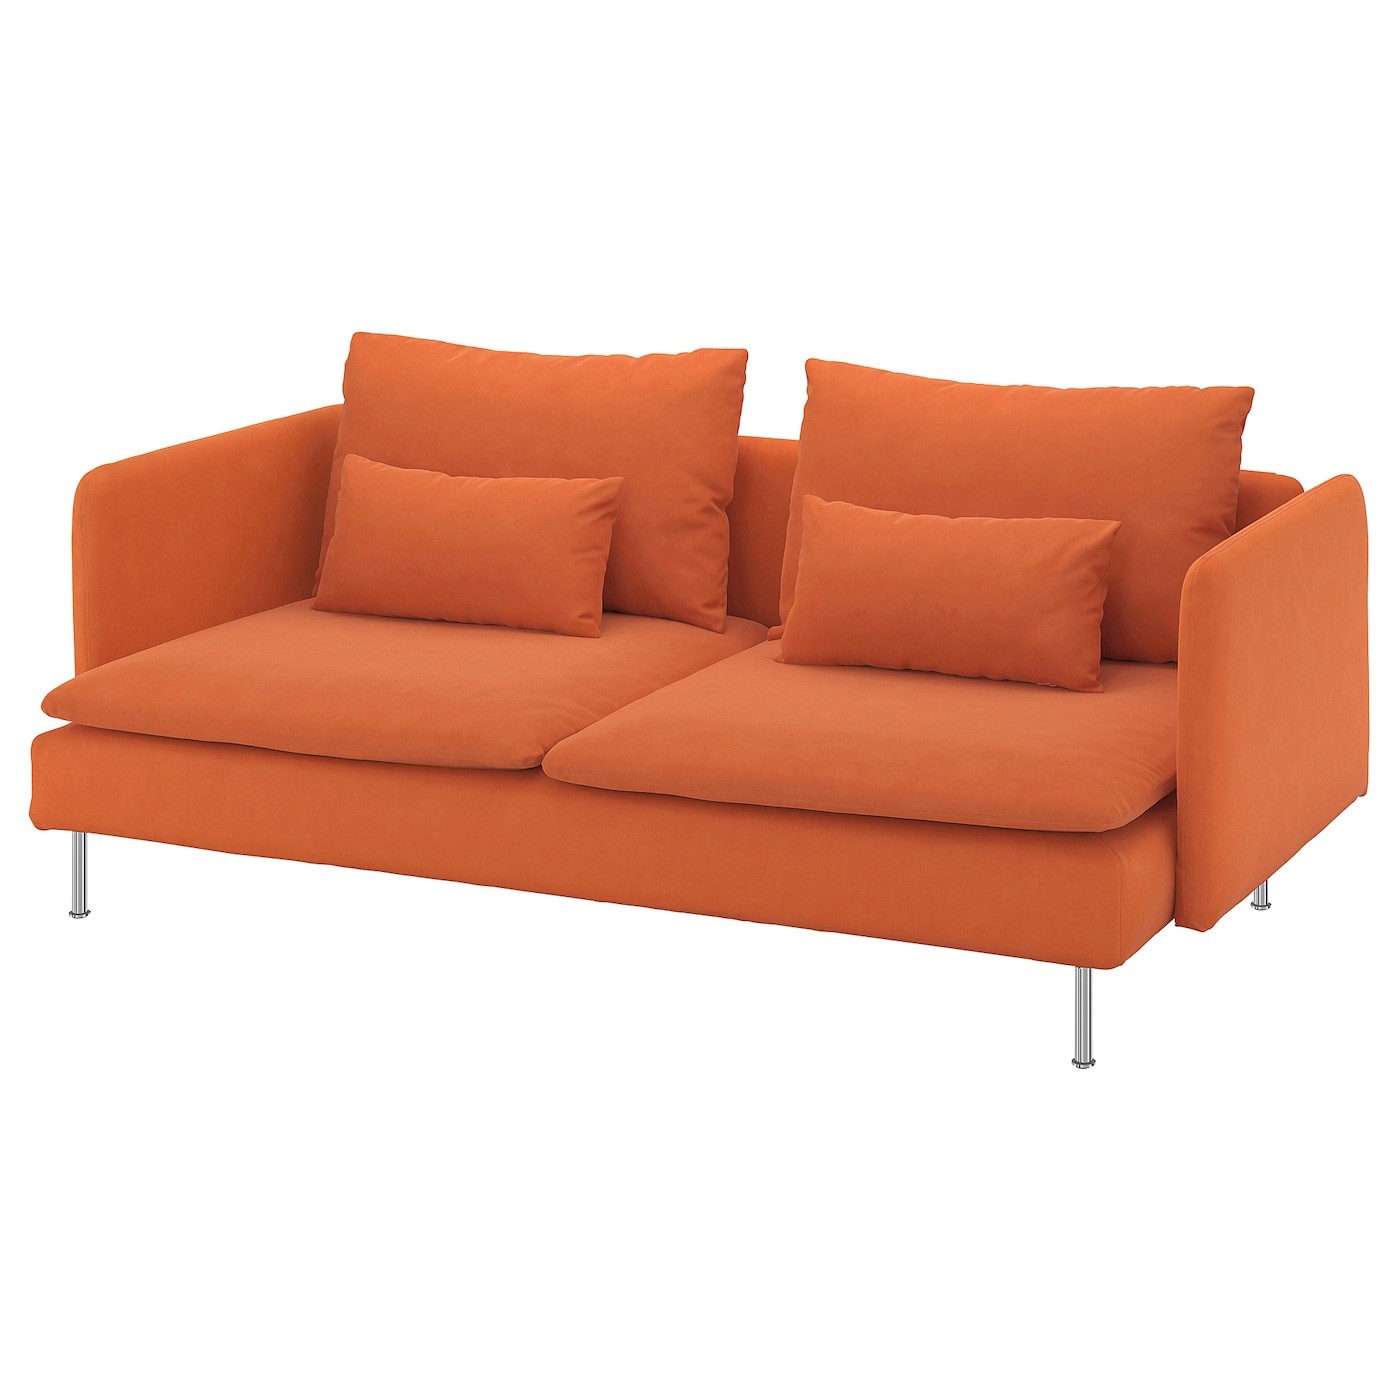 SÖDERHAMN 3-seat sofa